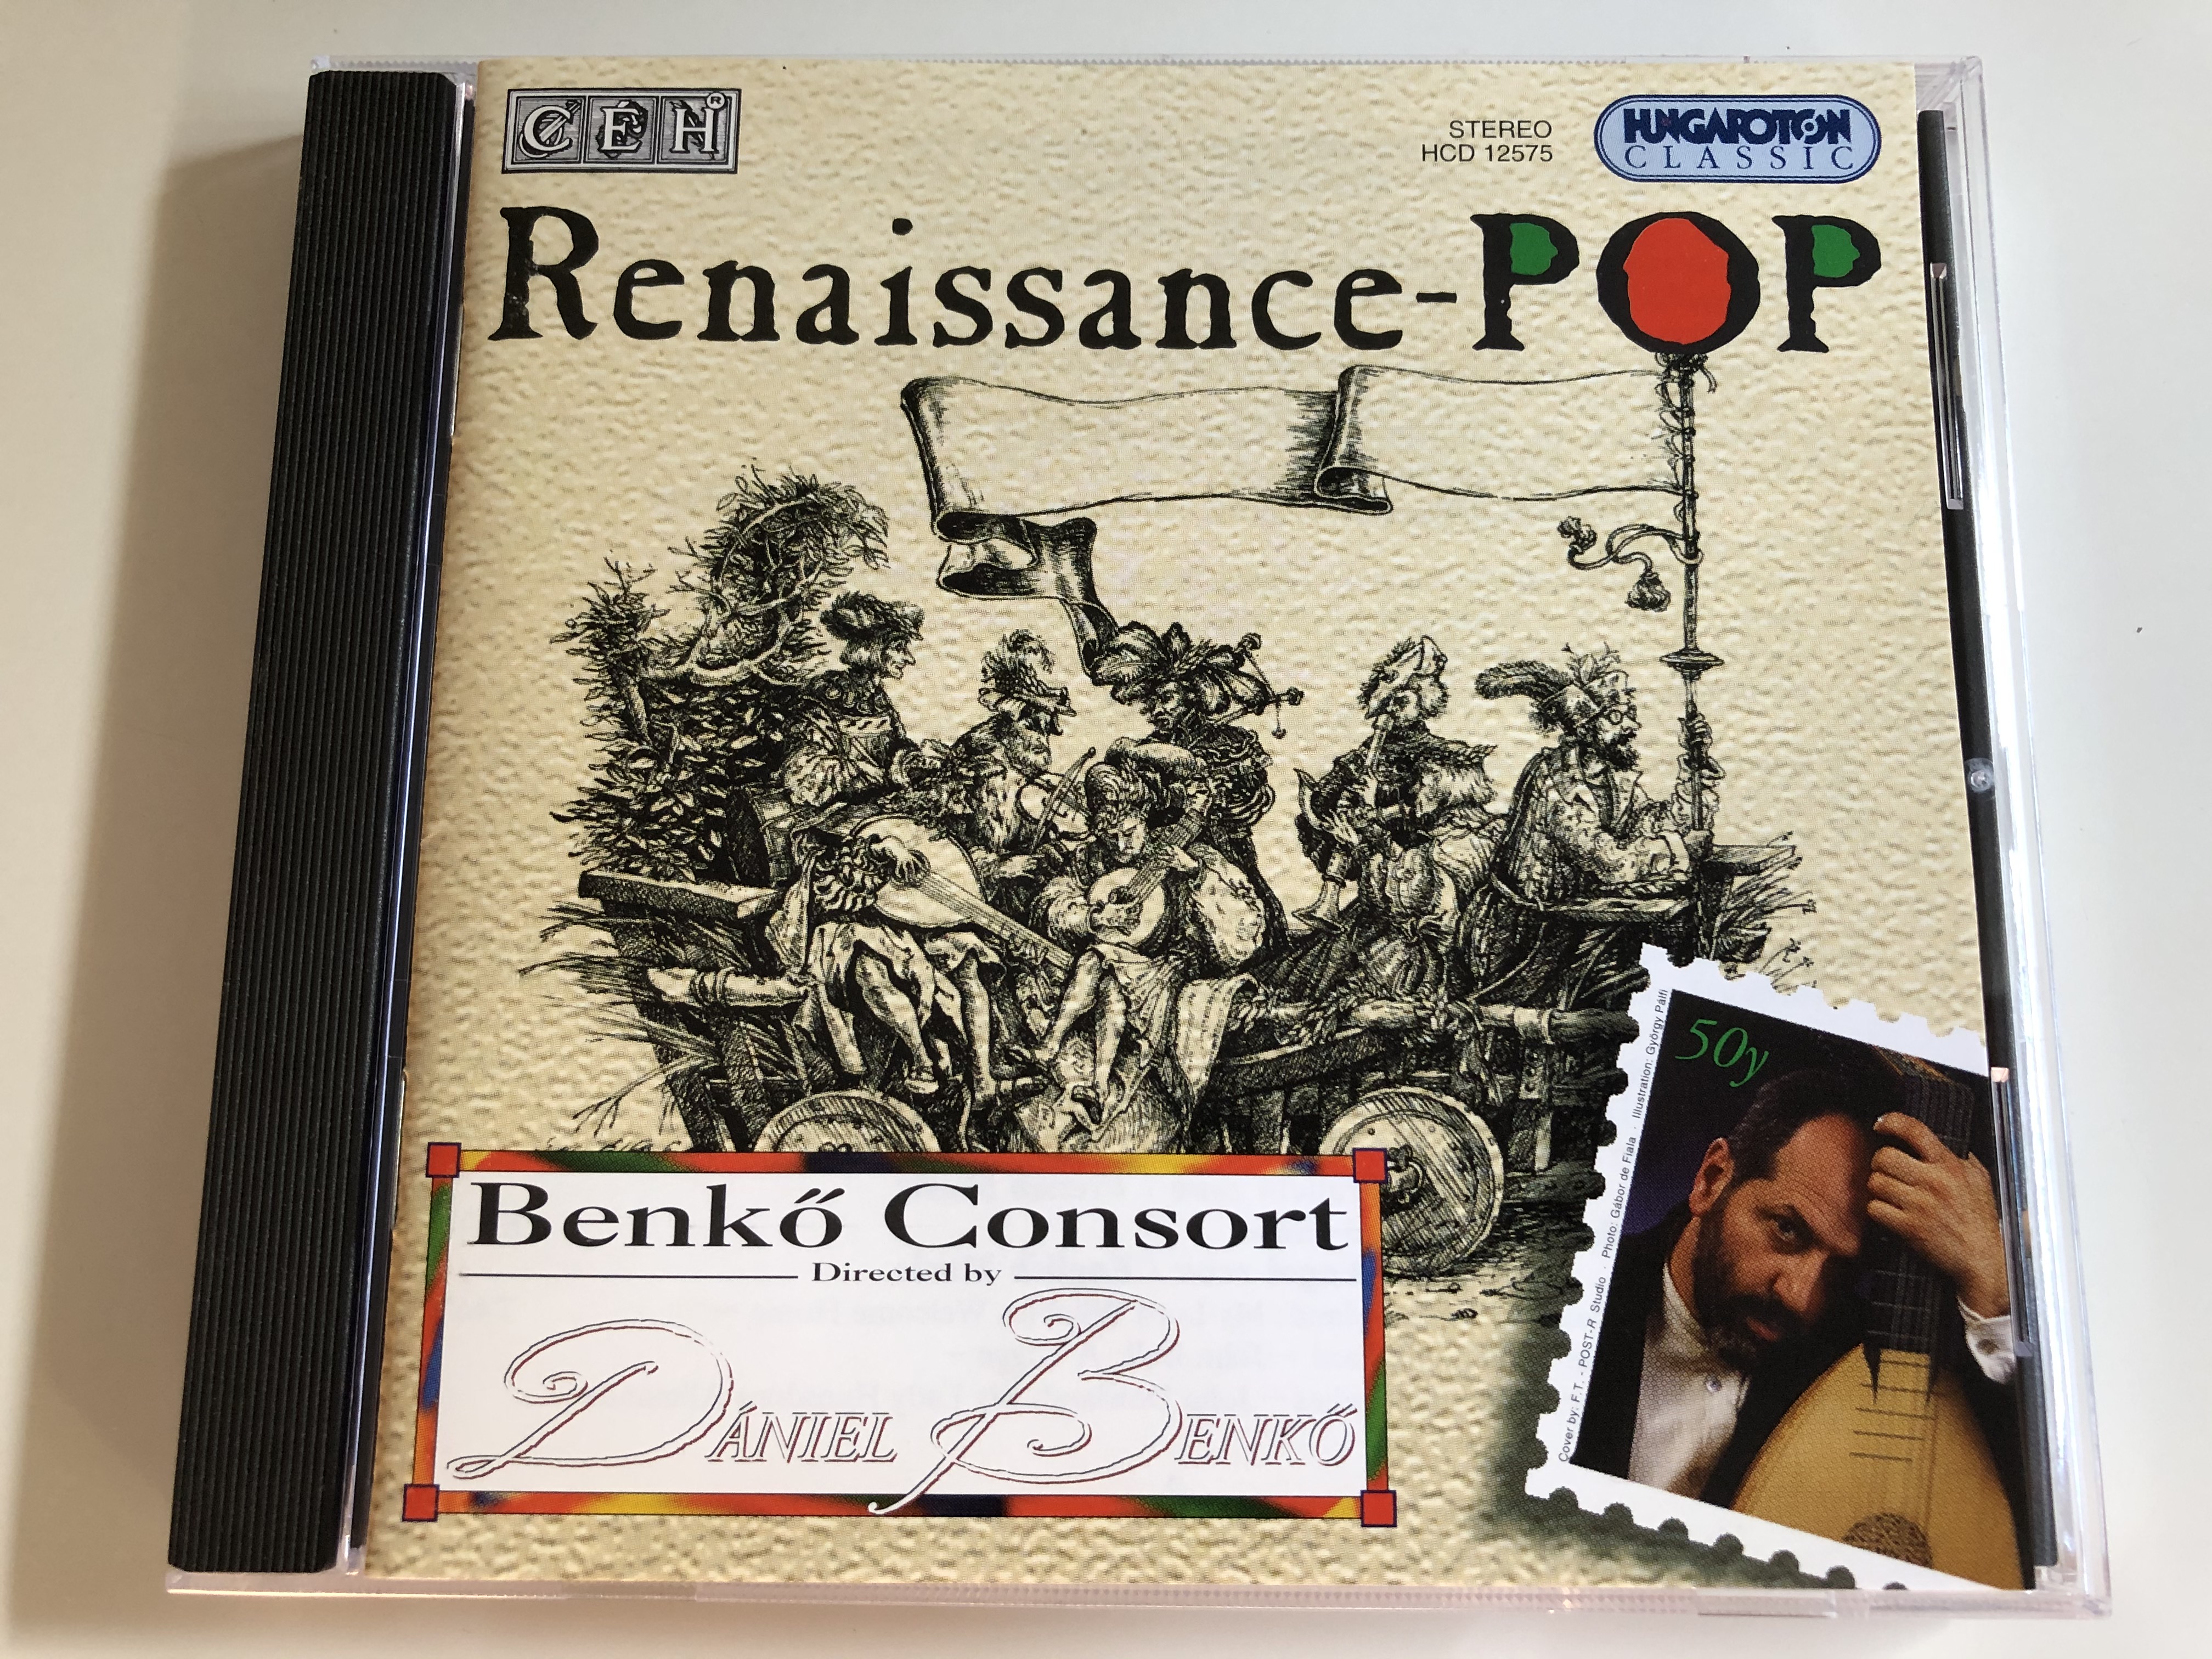 renaissance-pop-benk-consort-directed-by-daniel-benko-hungaroton-classic-audio-cd-1997-stereo-hcd-12575-1-.jpg